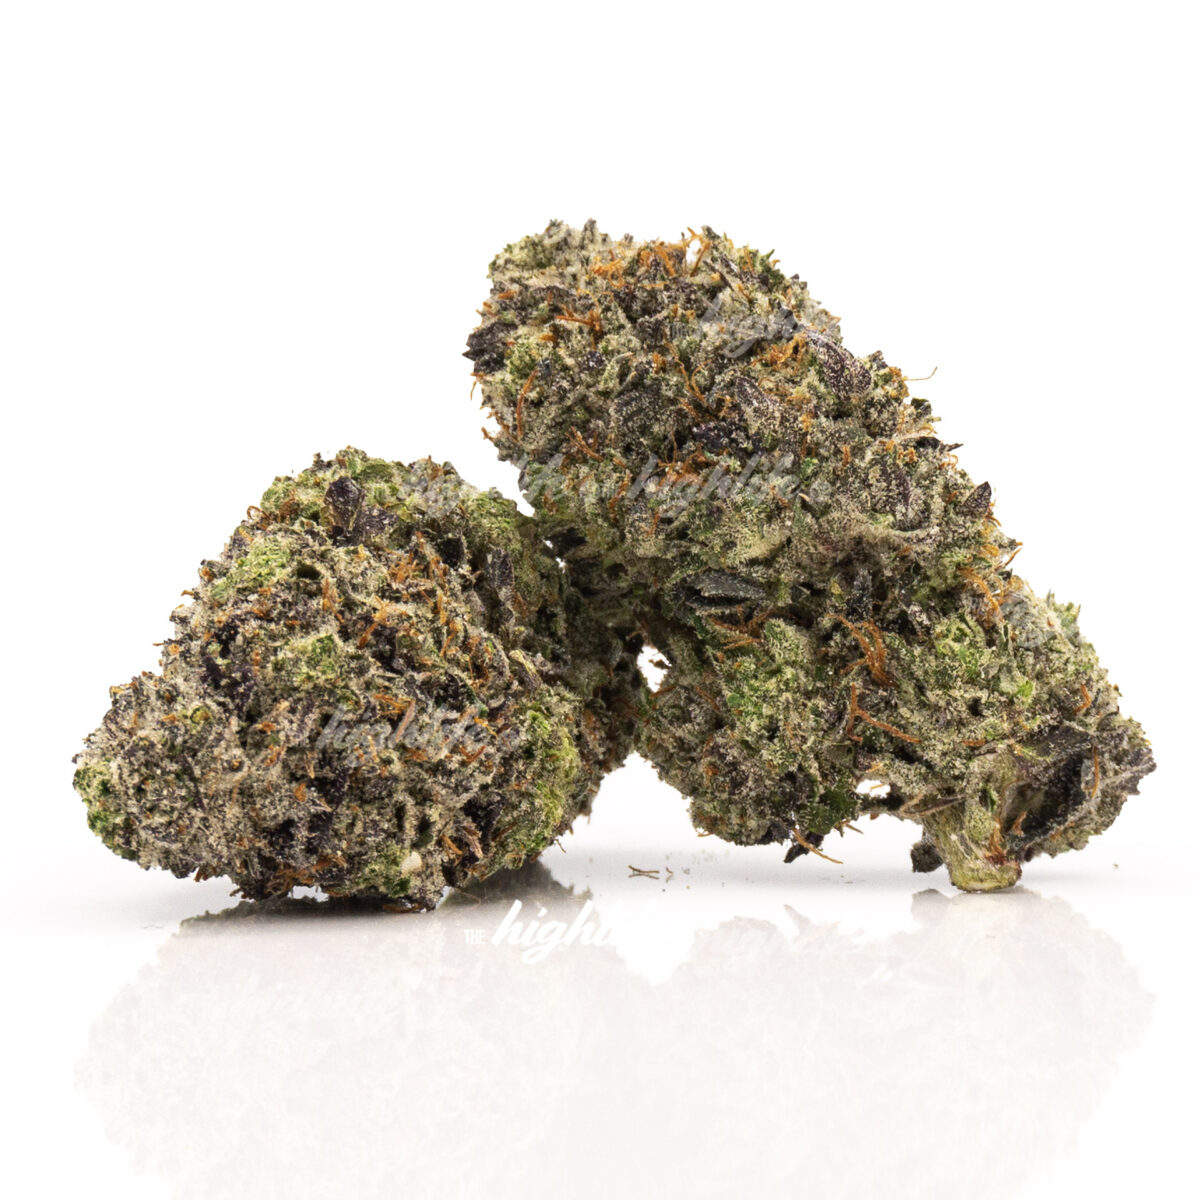 White Death cannabis marijuana strain - available in ottawa